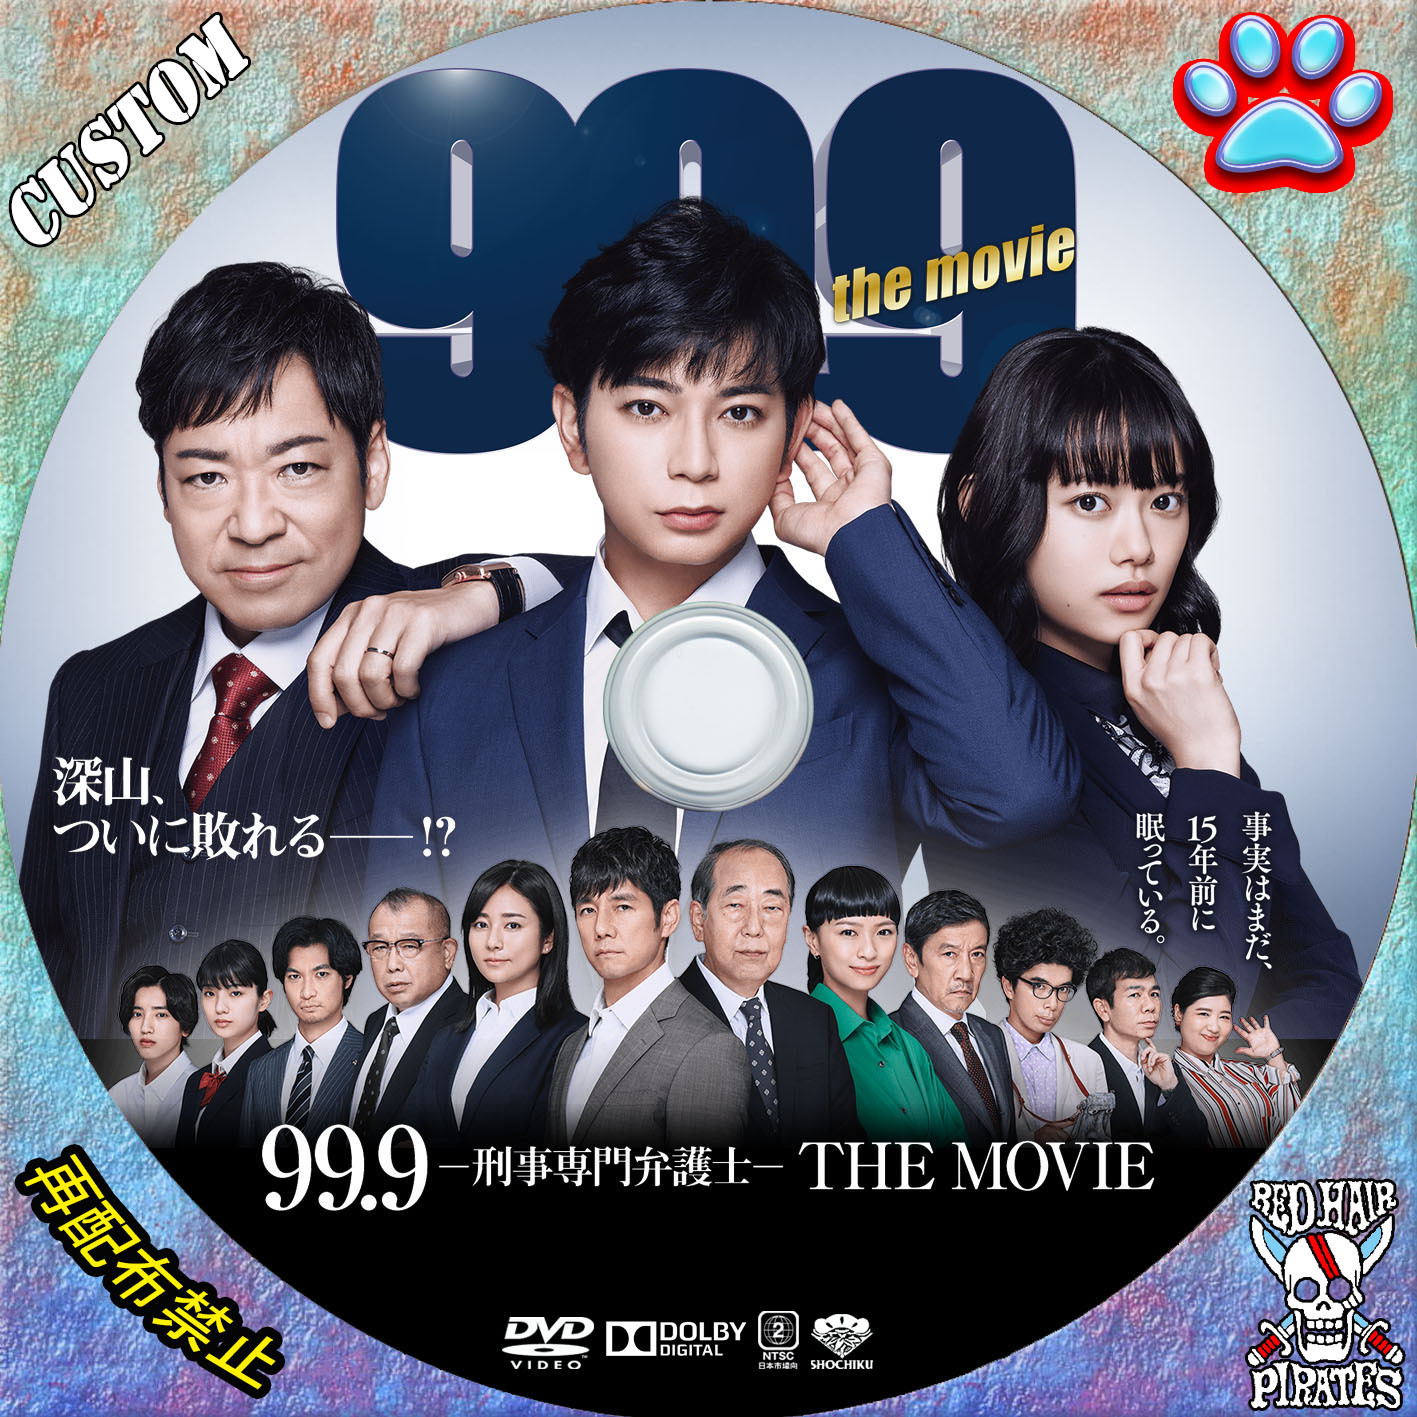 DVD 99.9-刑事専門弁護士- SEASON DVD-BOX - DVD